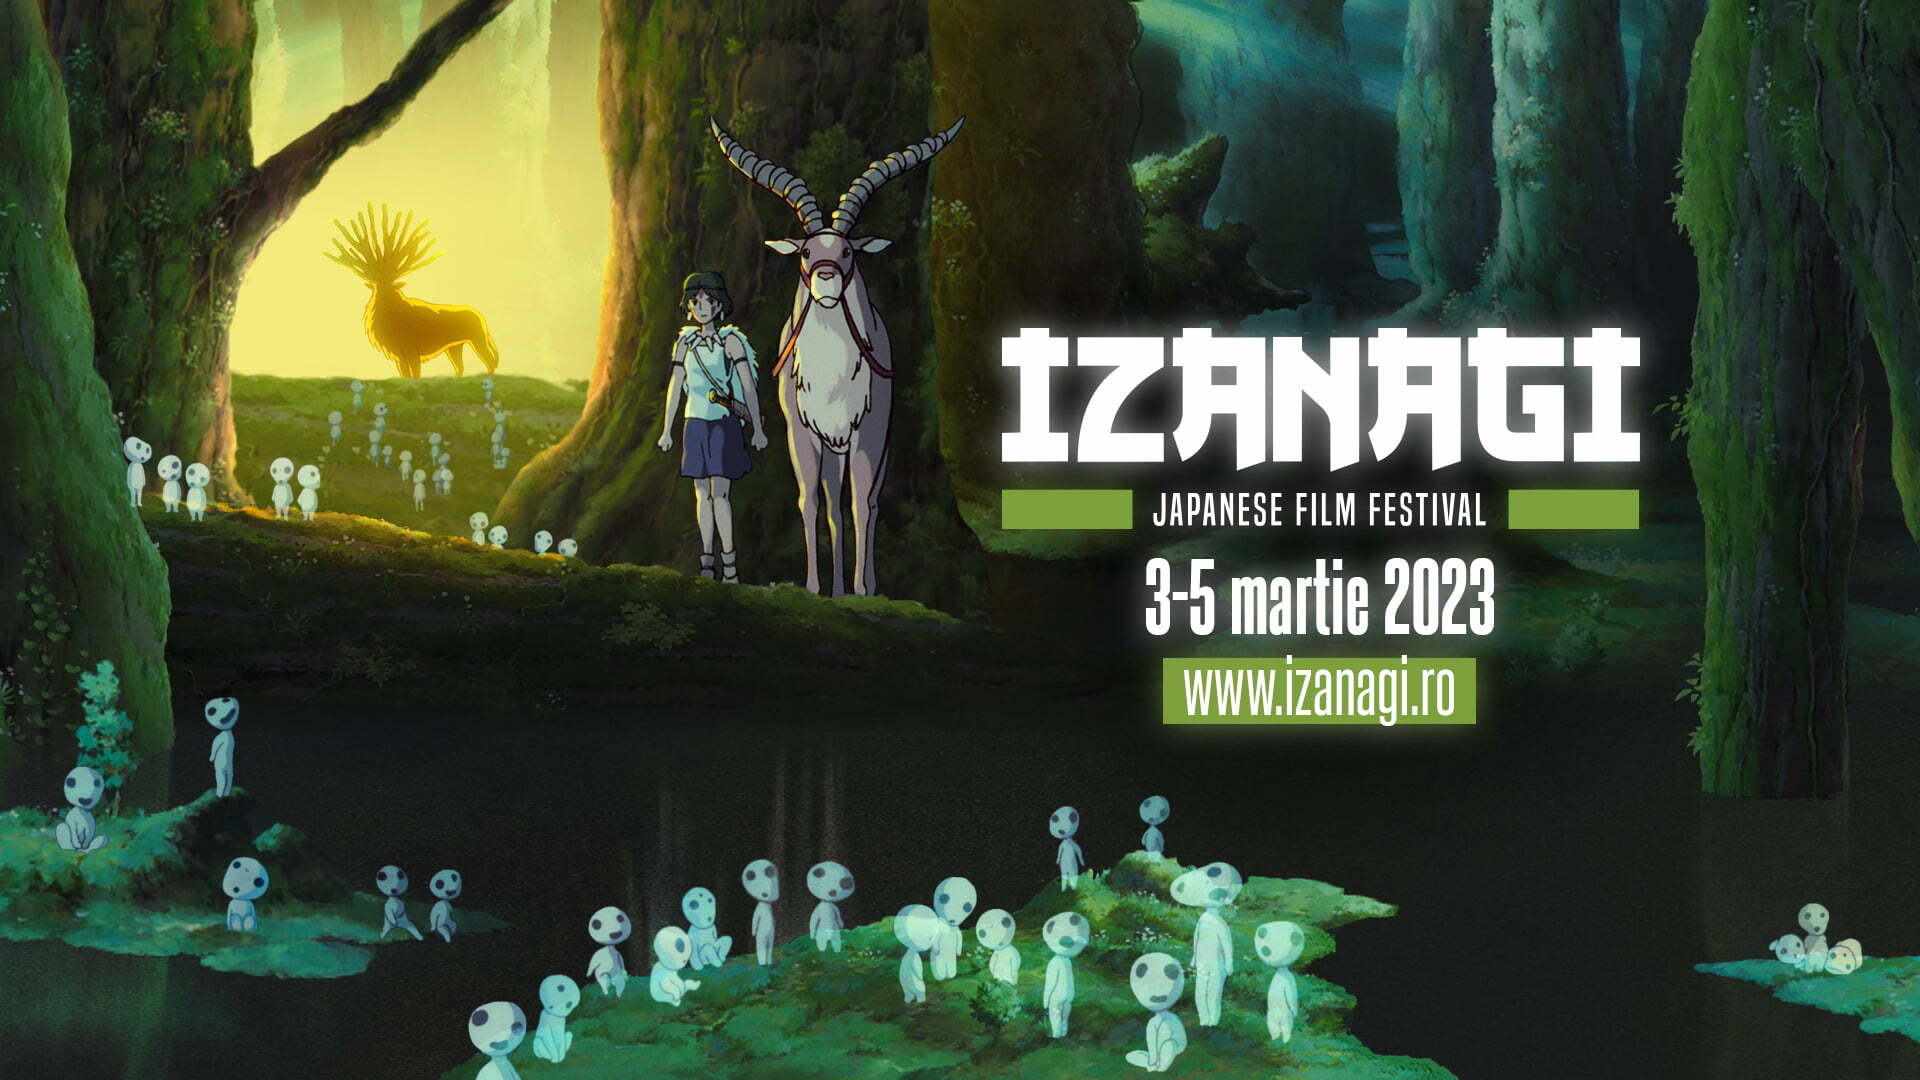 IZANAGI - Japanese Film Festival, 3-5 martie 2023, ediția a III-a: spiritualitate